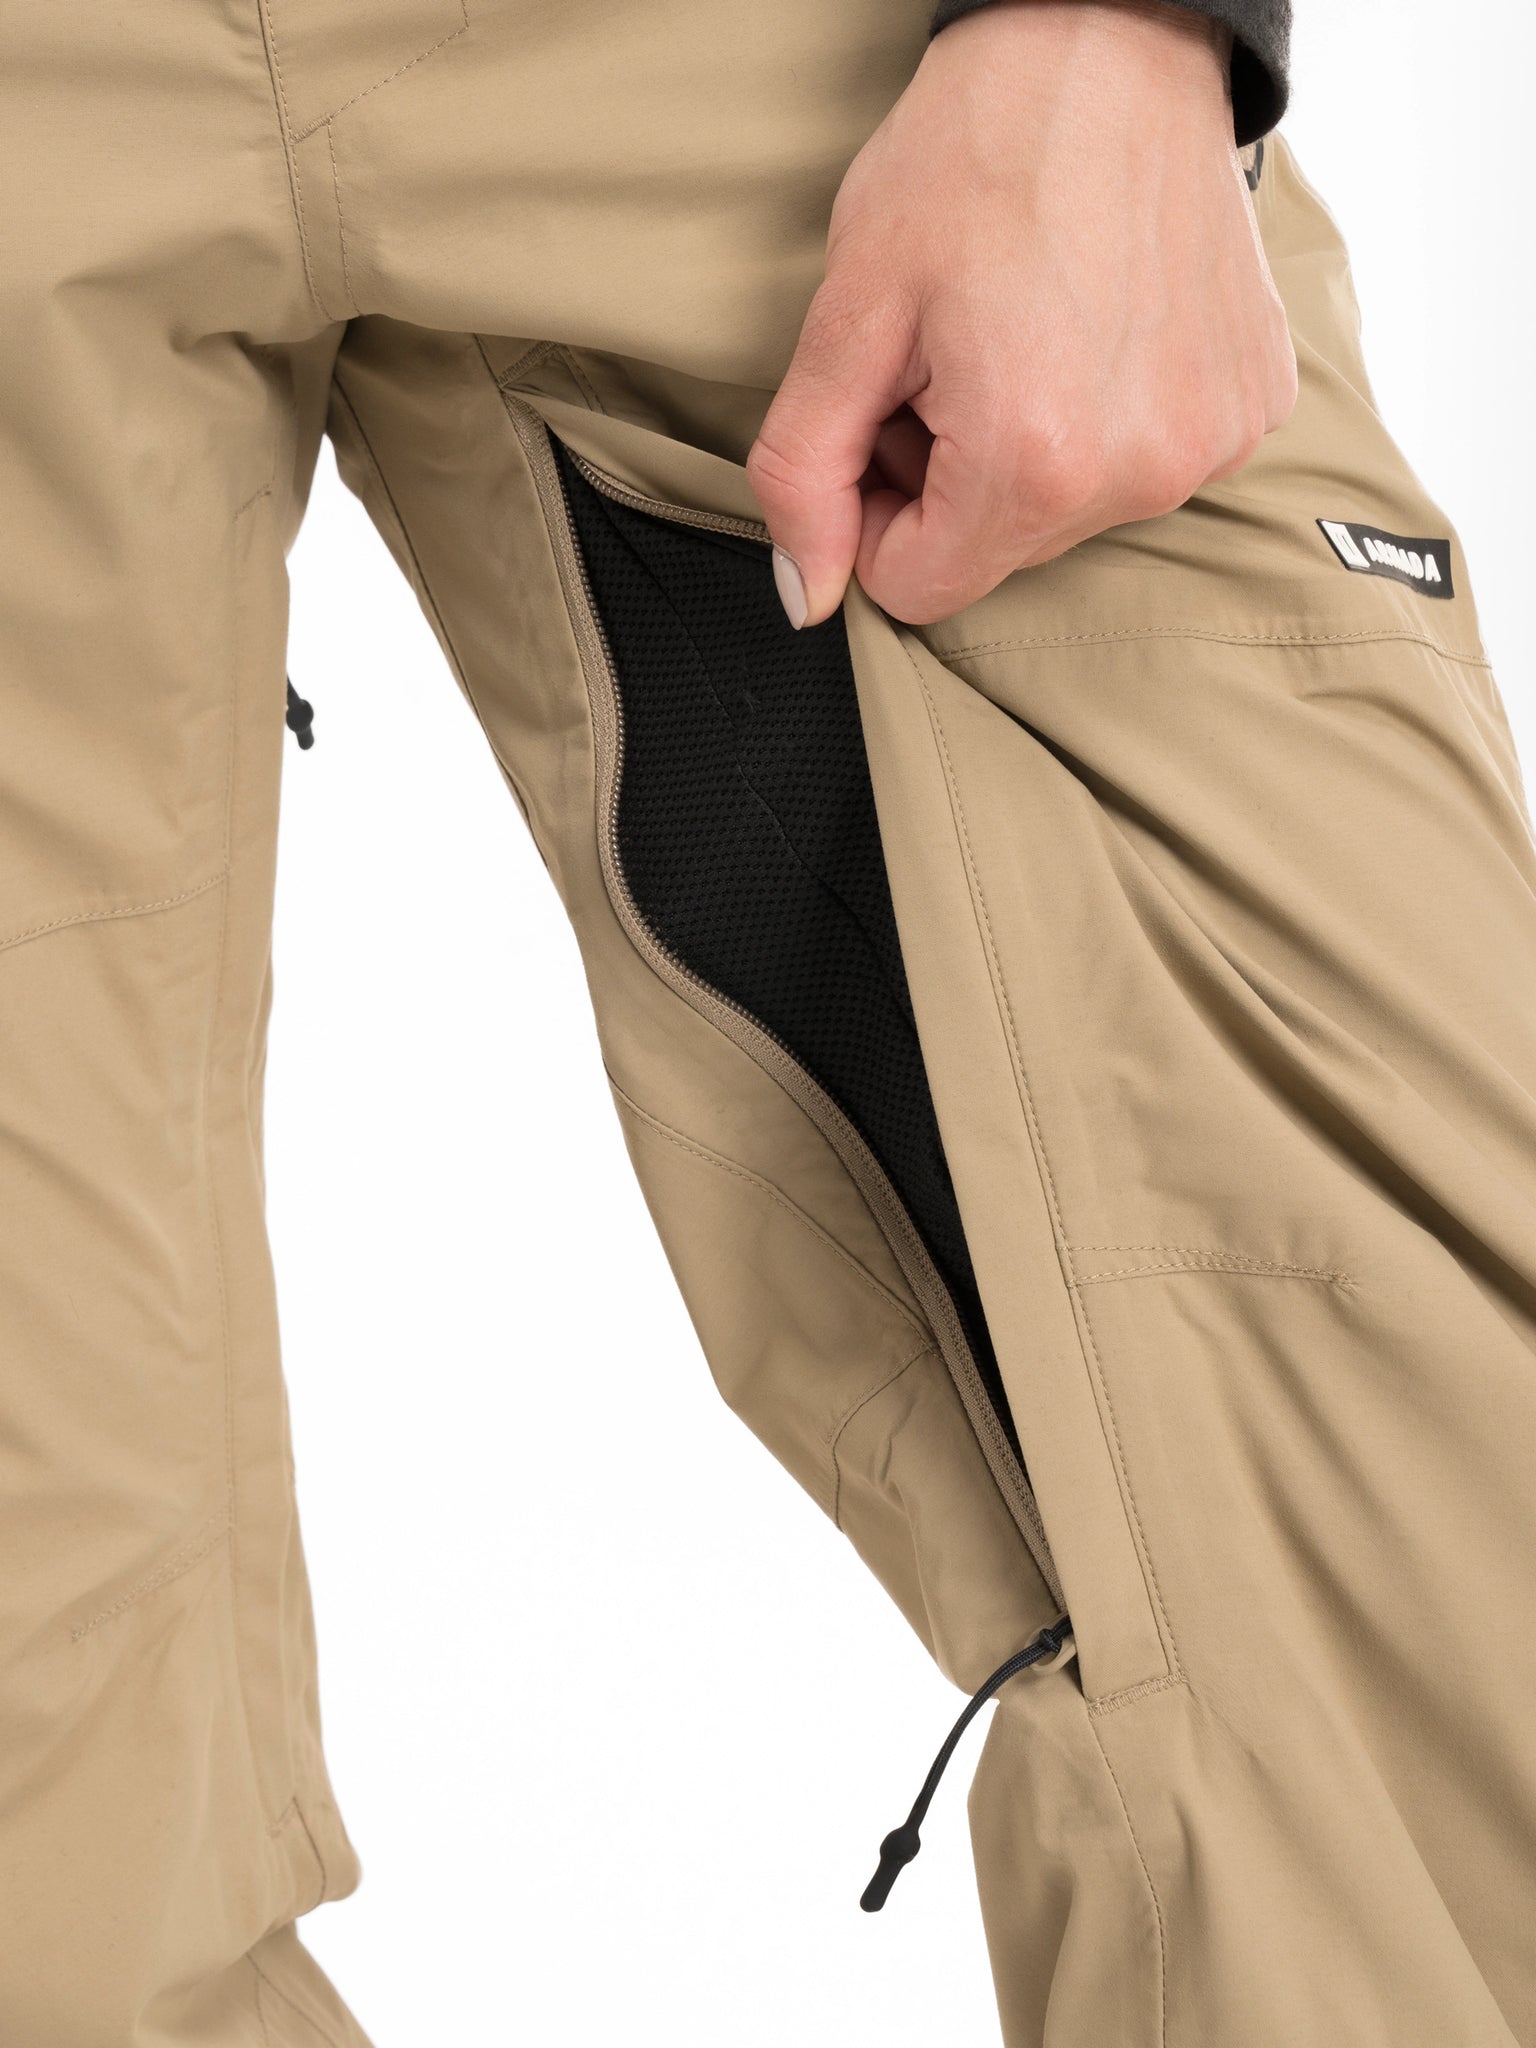 ARMADA PASCORE 2L WOMEN'S BIB khaki inner thigh zipperwith model